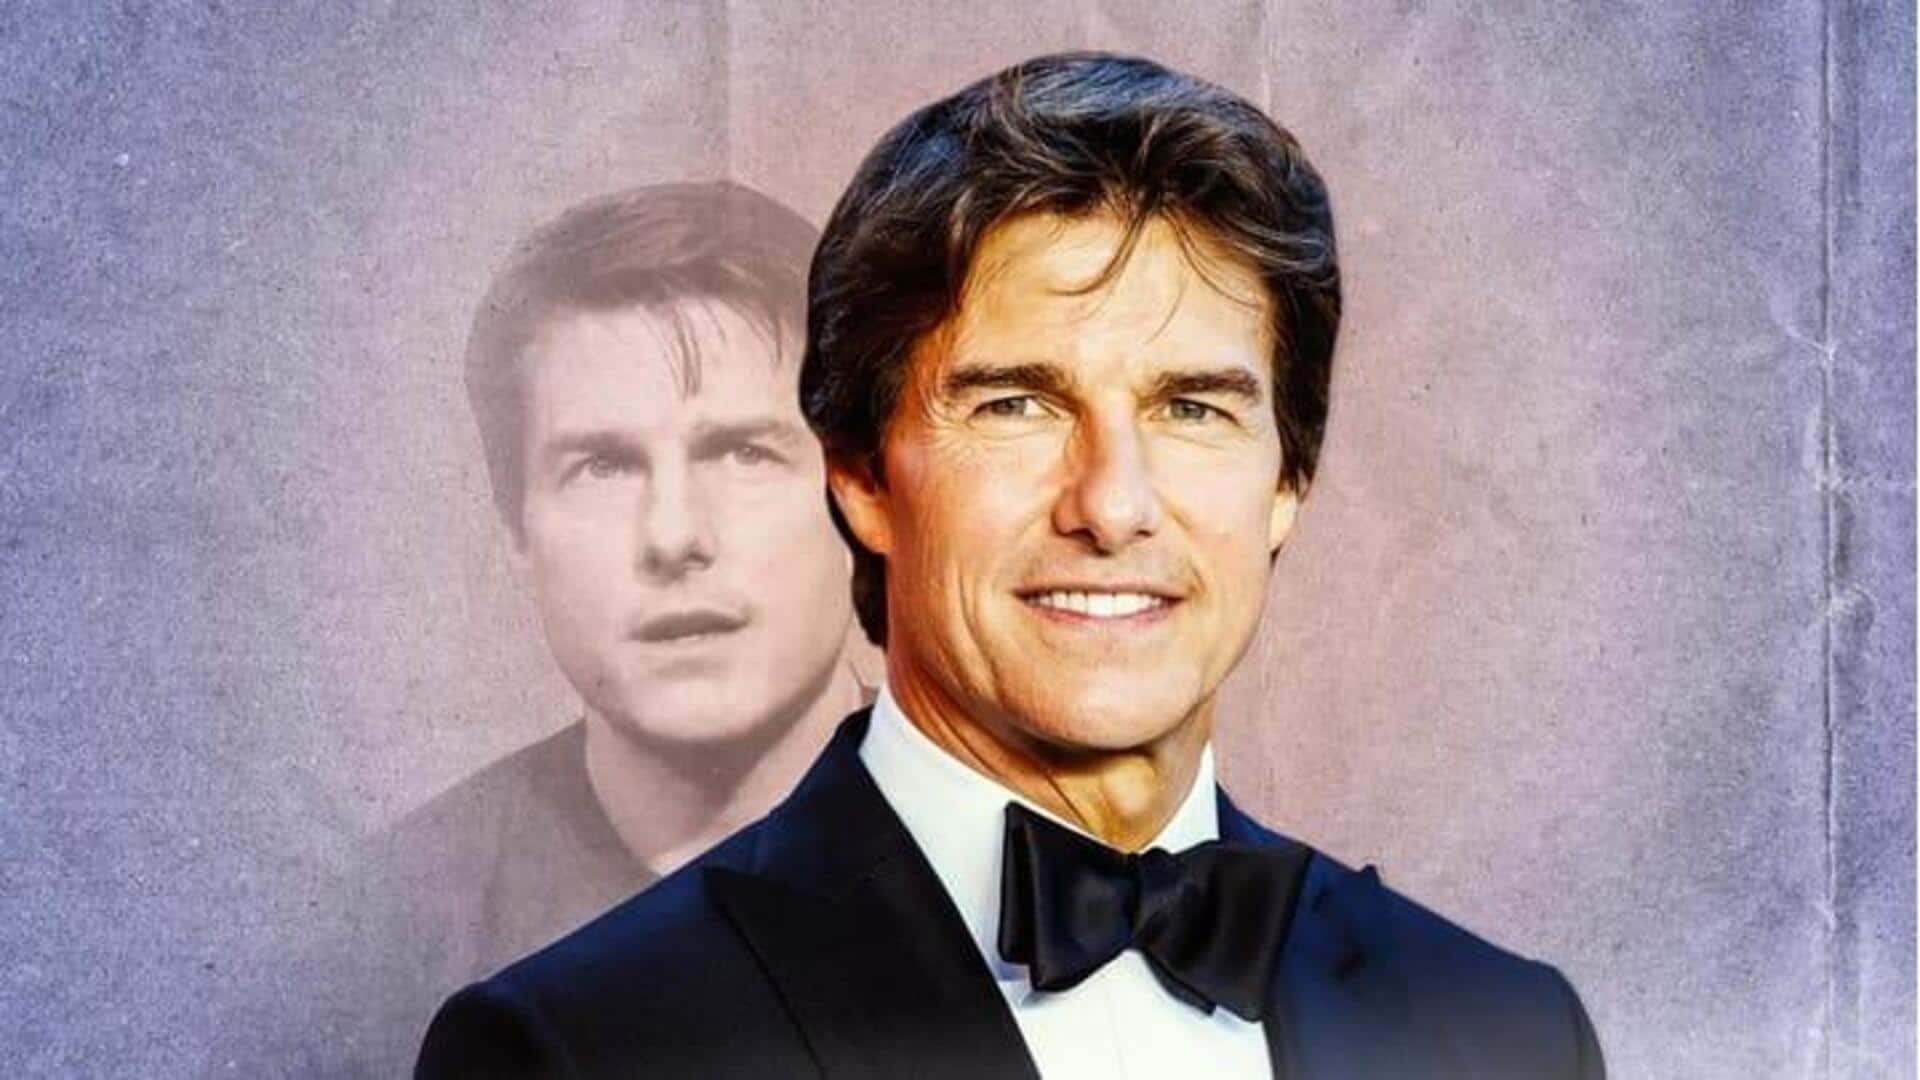 Tom Cruise's 5 best movies as per IMDb 